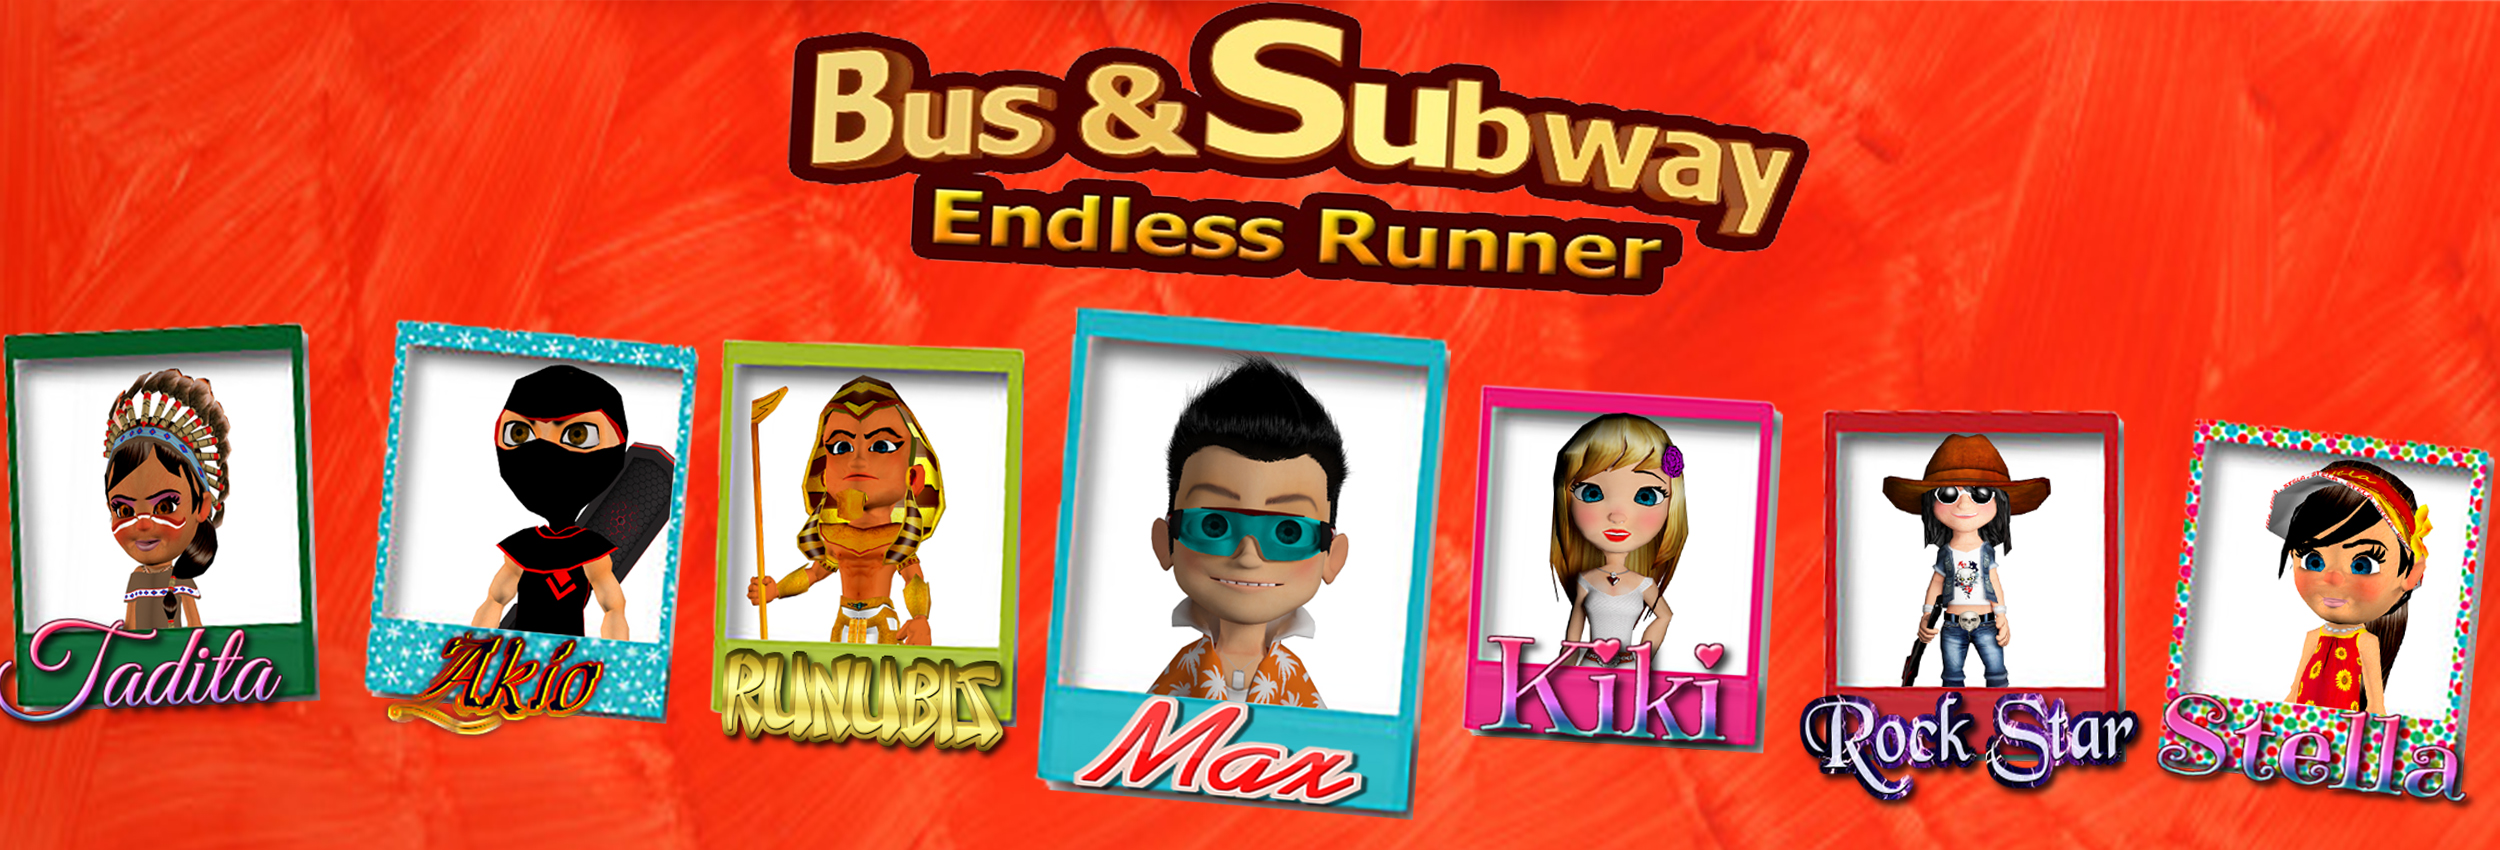 Bus Subway Runner - Play on